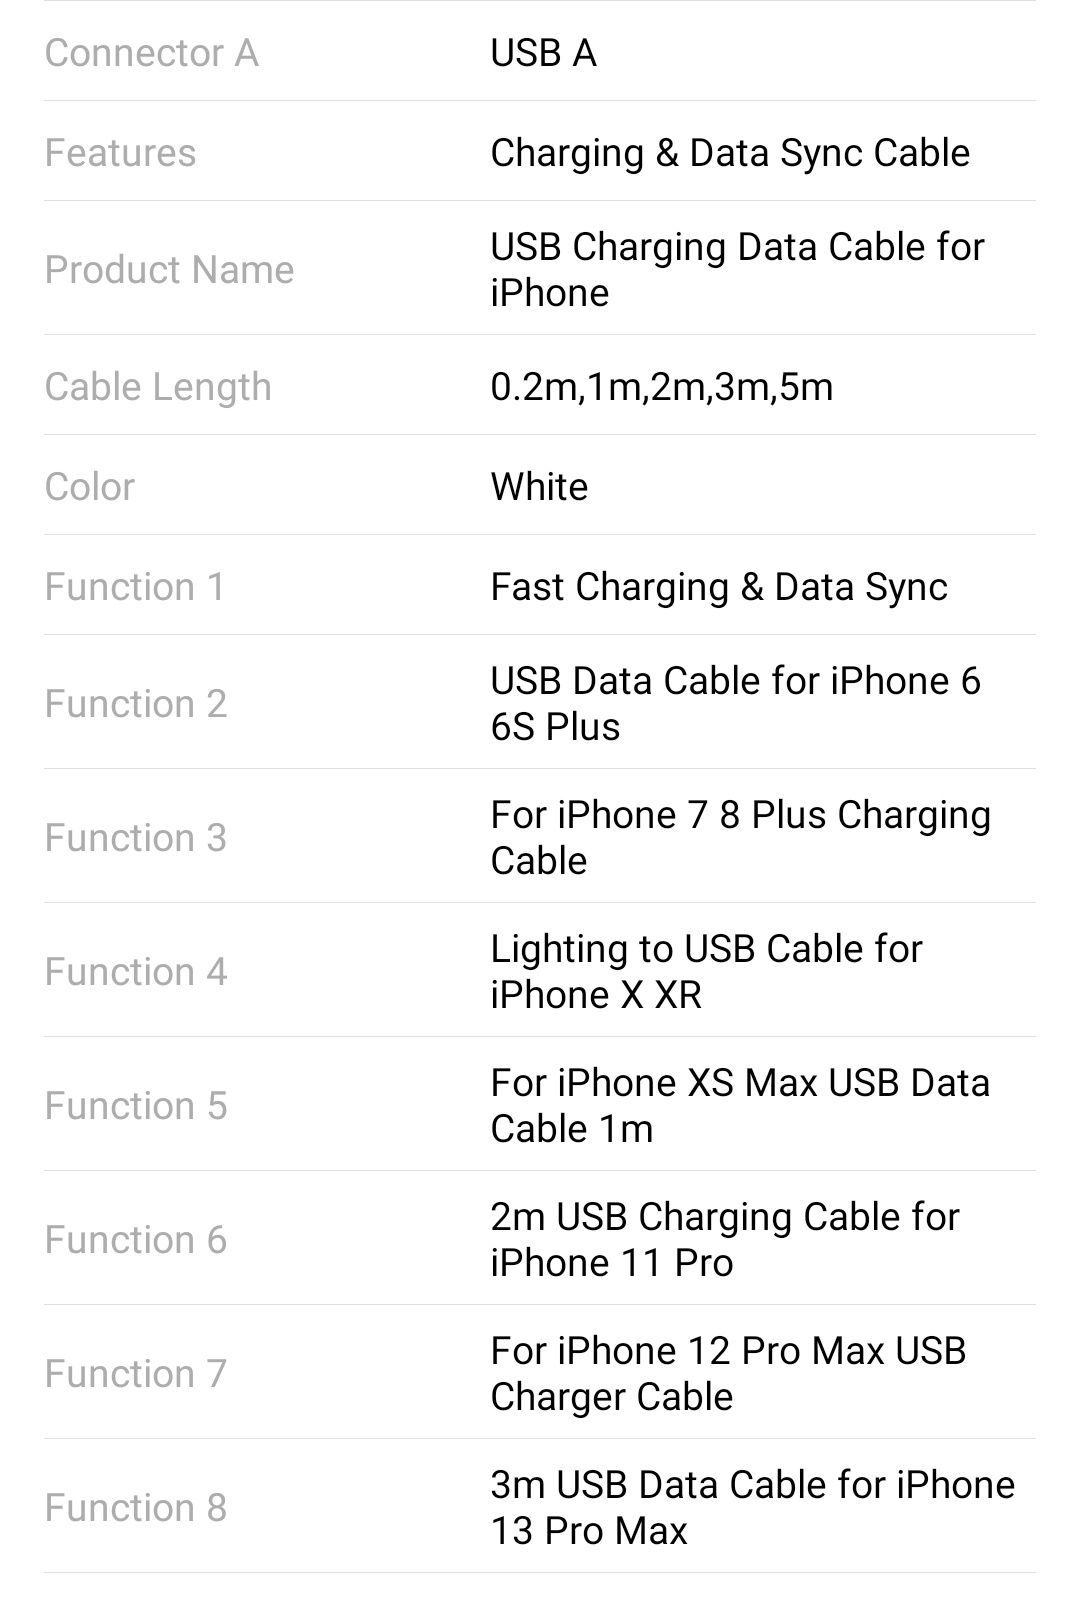 Кабель шнур провод USB для зарядки iPhone iPad Айфон 3А. 1 м, или 2 м